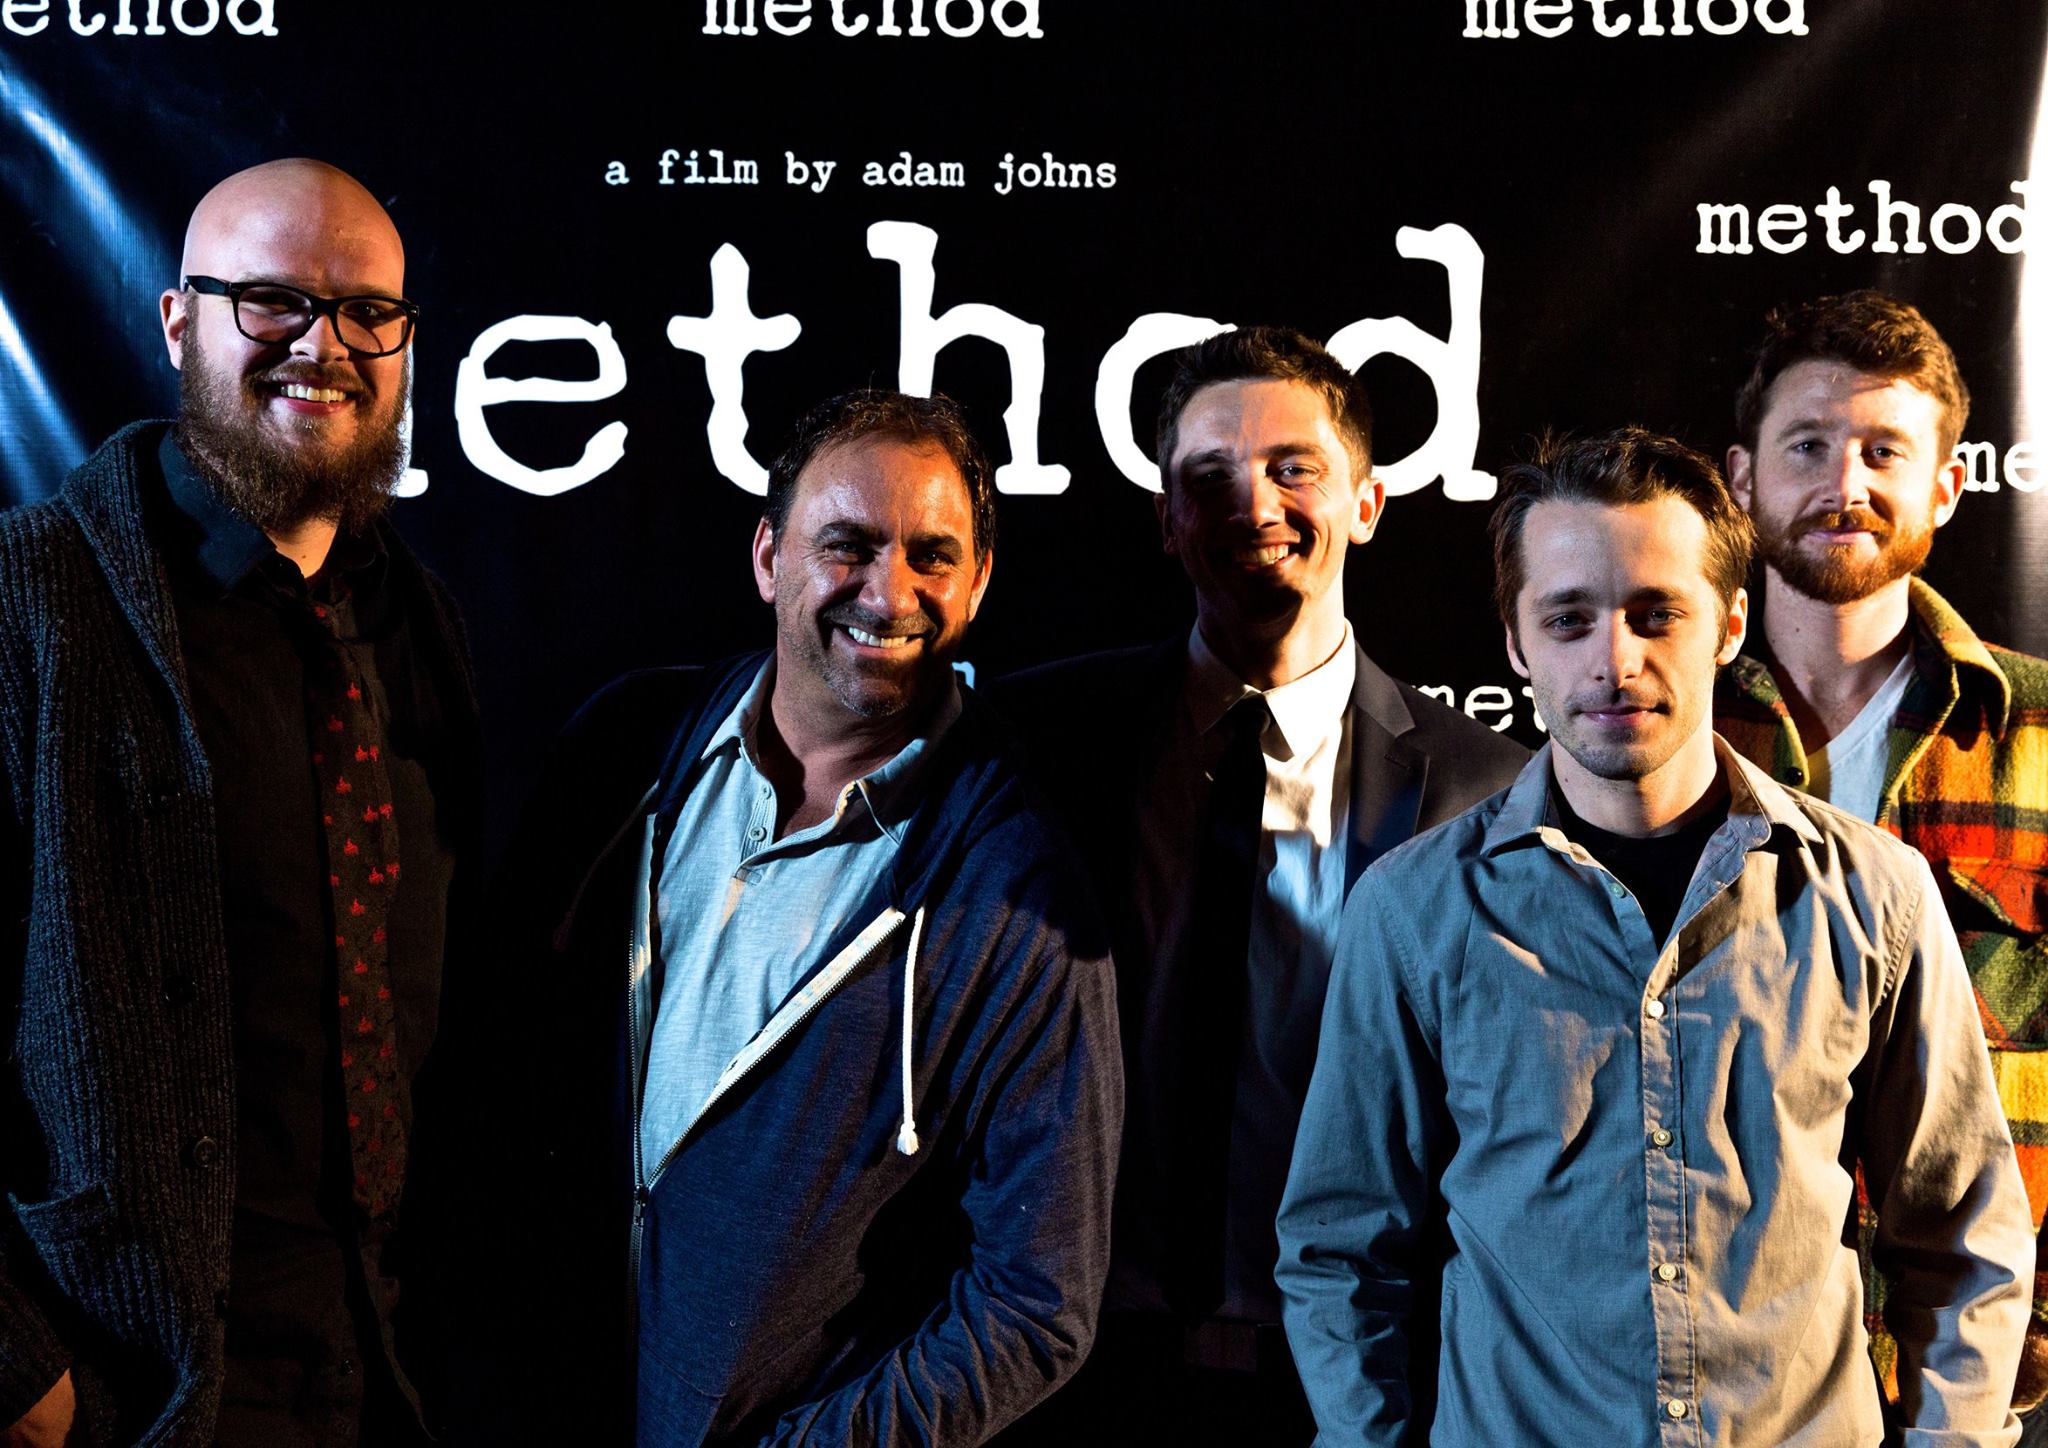 Adams Johns, Chris Degner, Jay Nelson, Ben Adams, and Will Nicol at their screening of Method